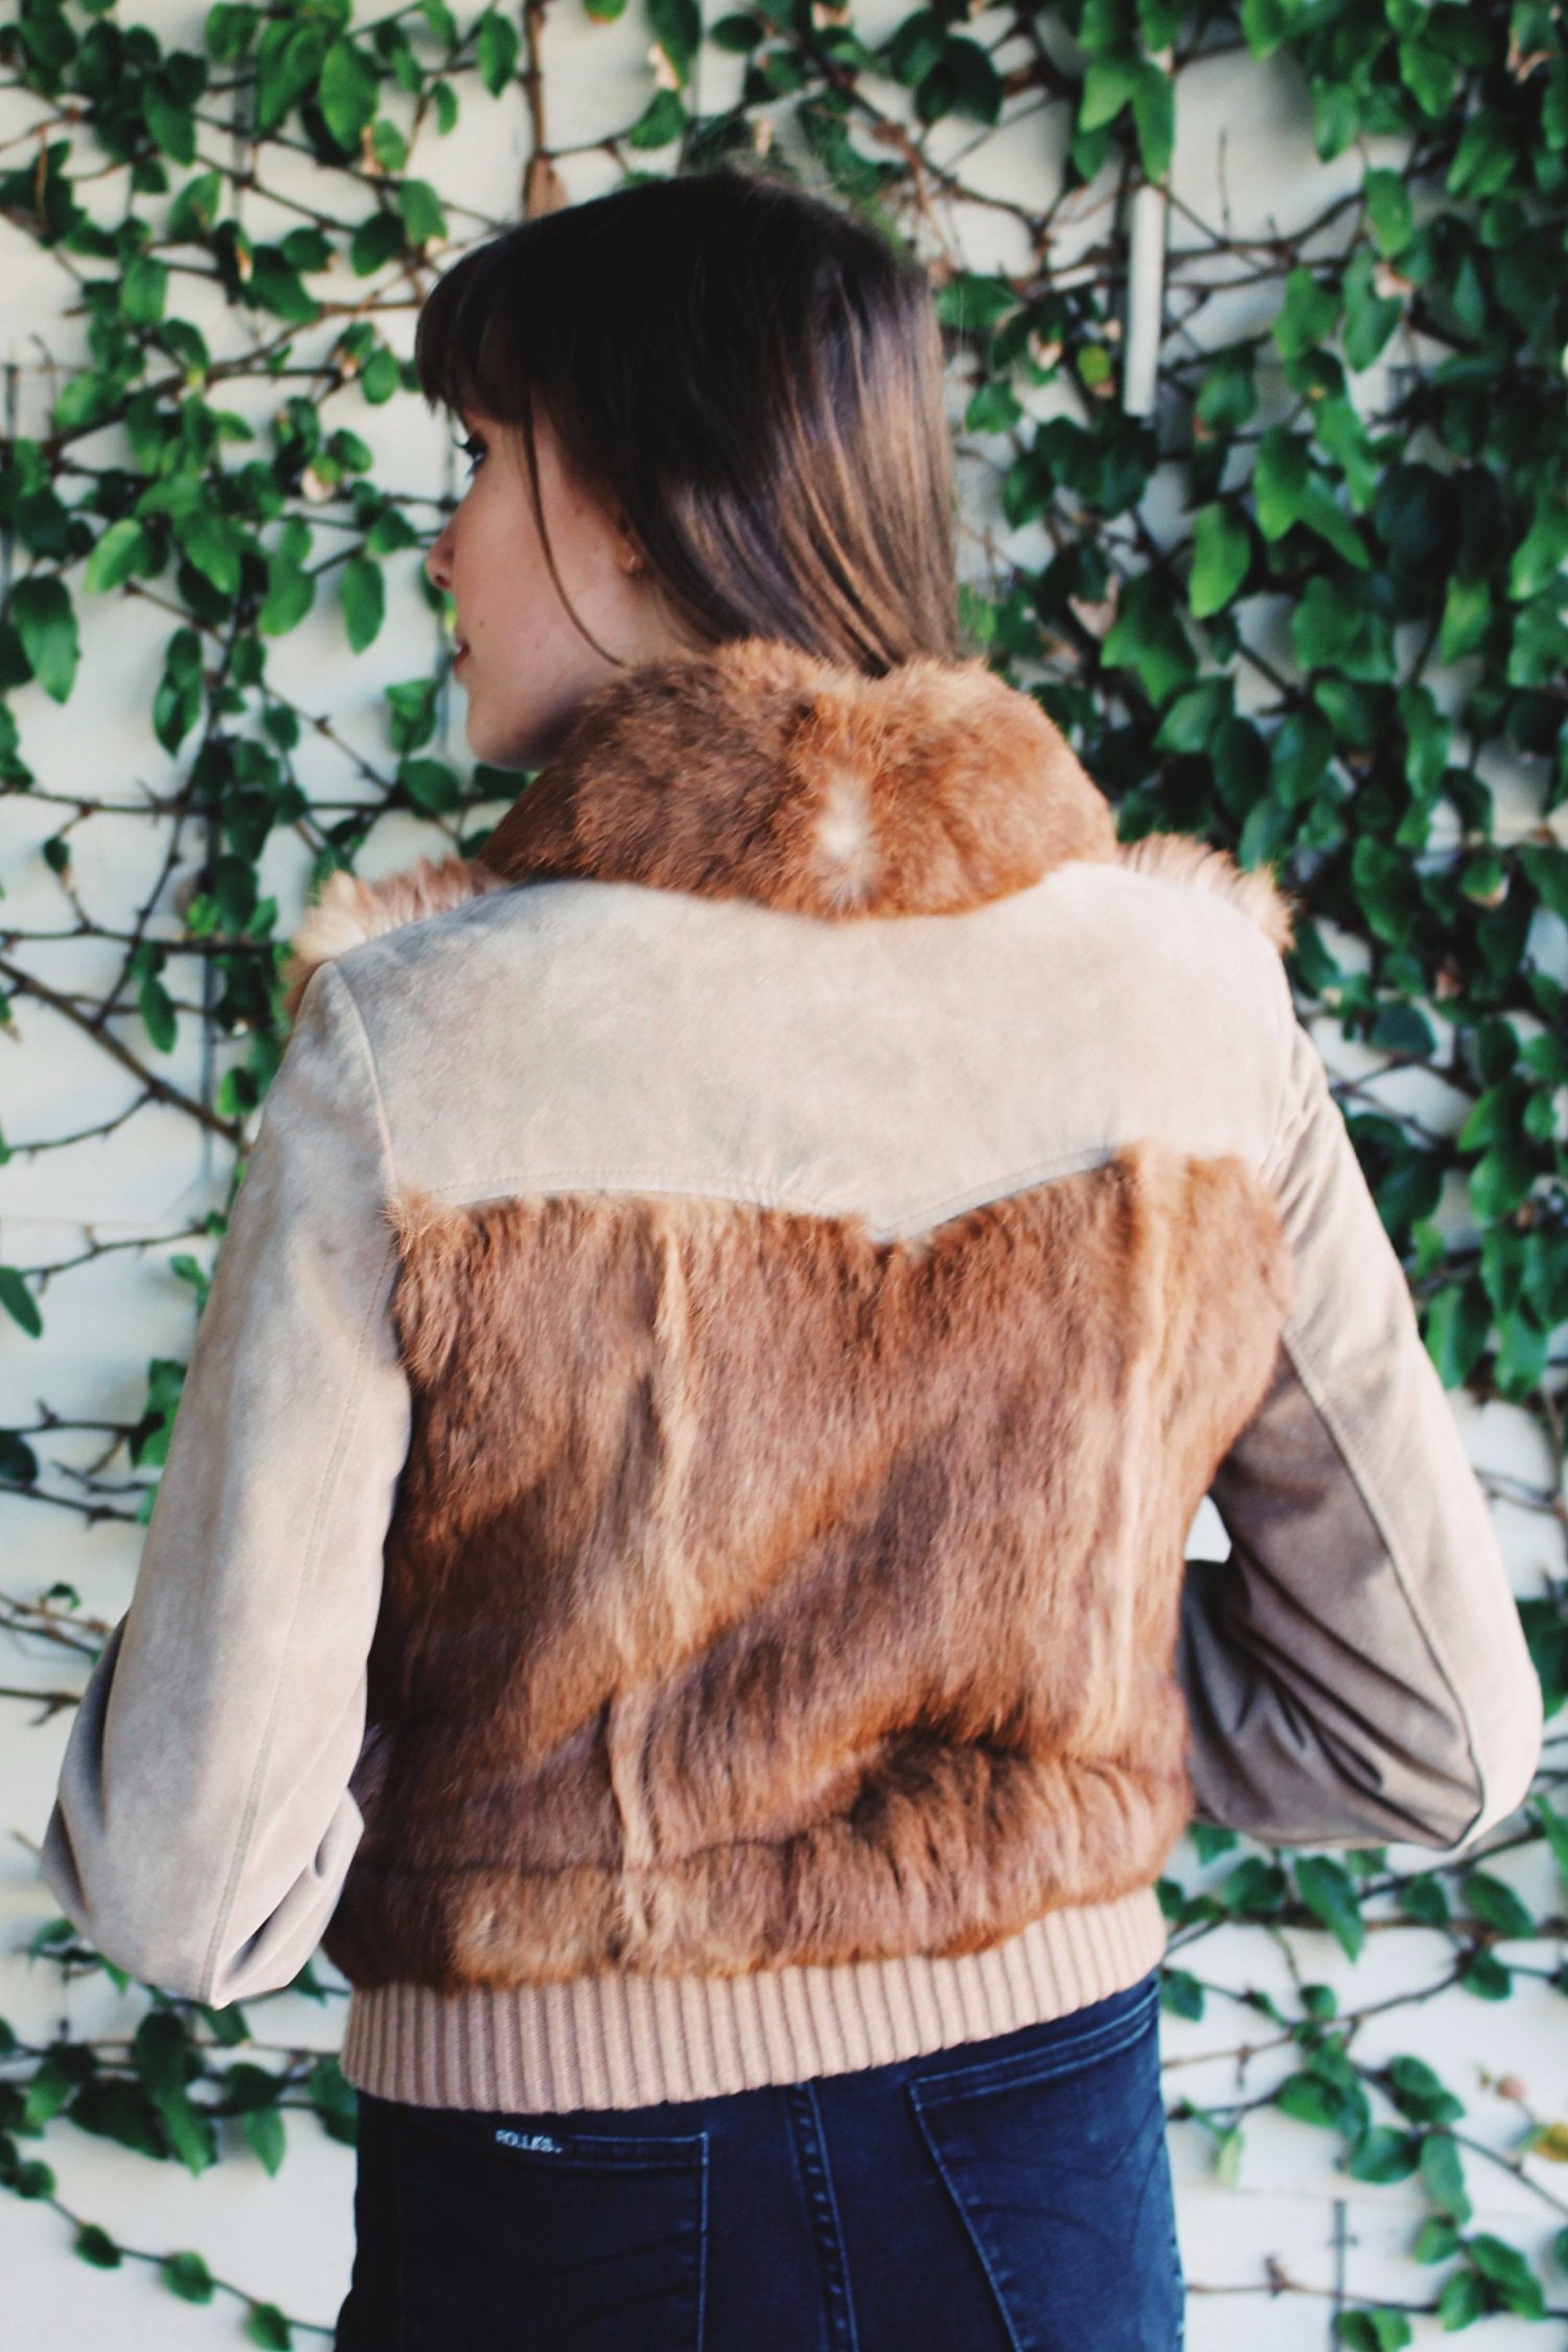 Festival Fur Coat - Bomber Jacket - Bomber Jacket For Women - Vintage Gypsy Jacket - Burning Man Fur Coat - Bohemian Fur Coat - Rabbit Fur